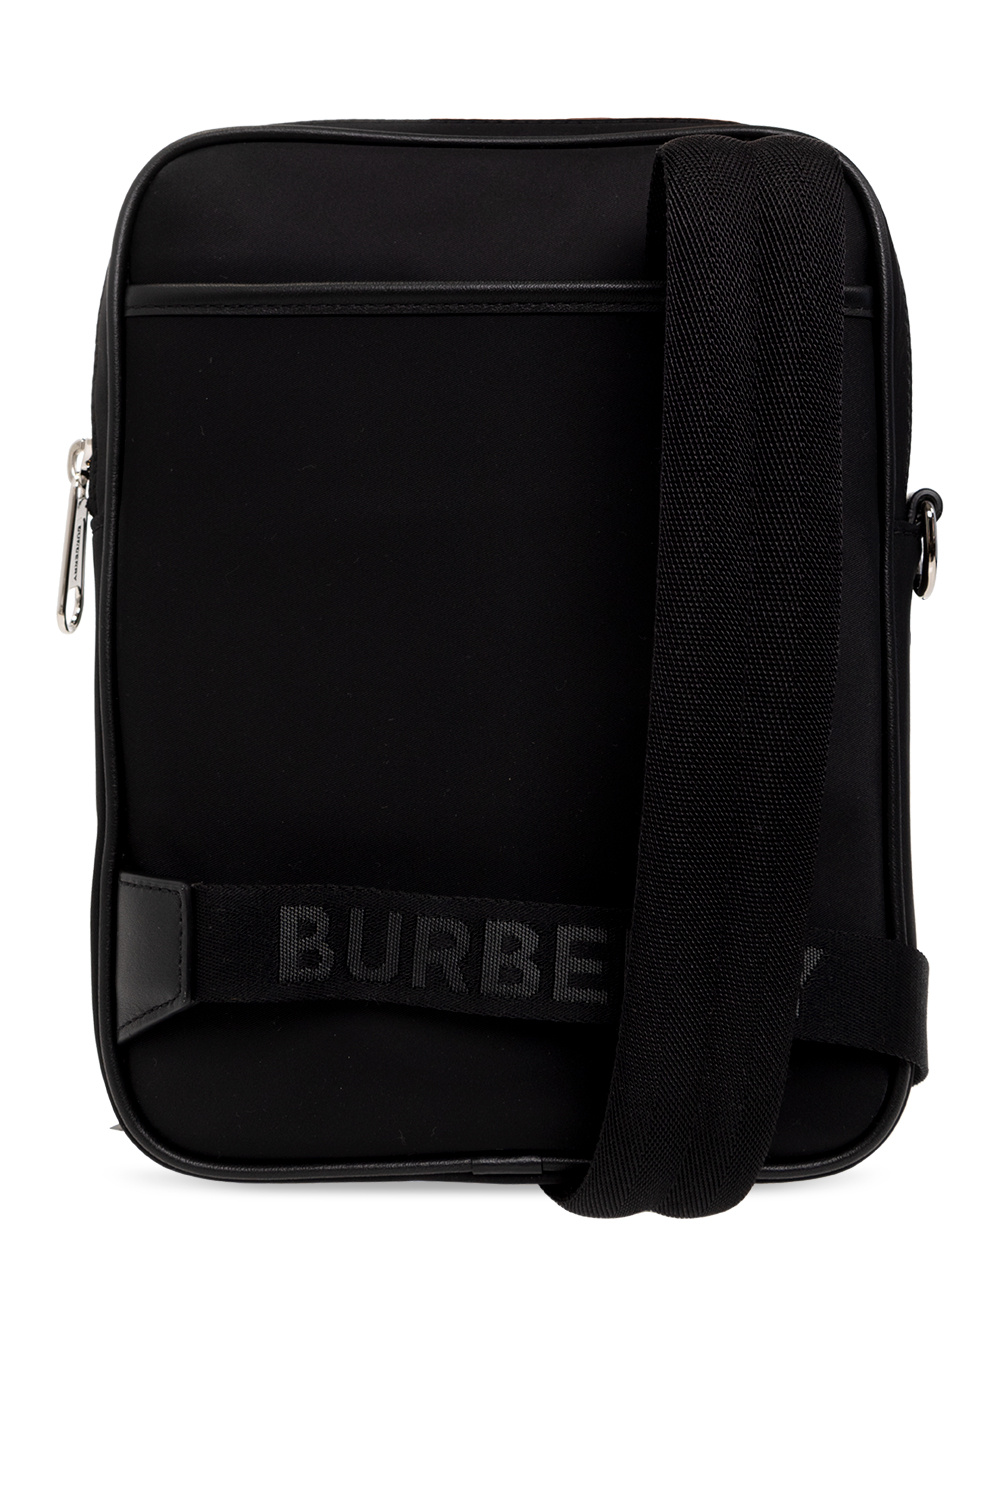 burberry For ‘Kieran’ shoulder bag